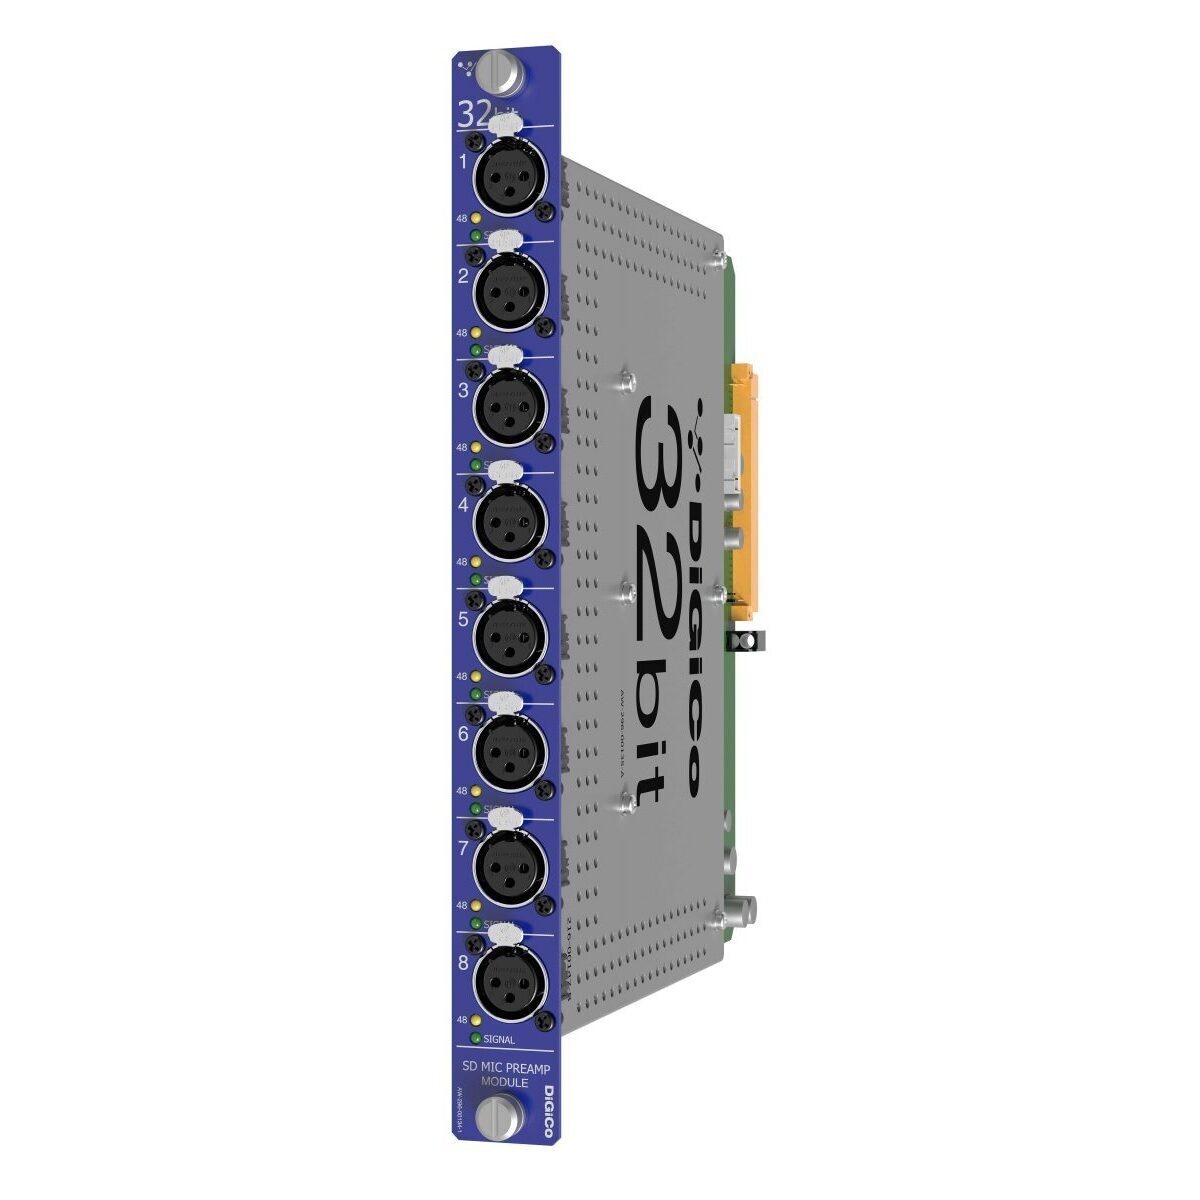 Digico 32bit MIC PREAMP sd-rack module 8x input XLR